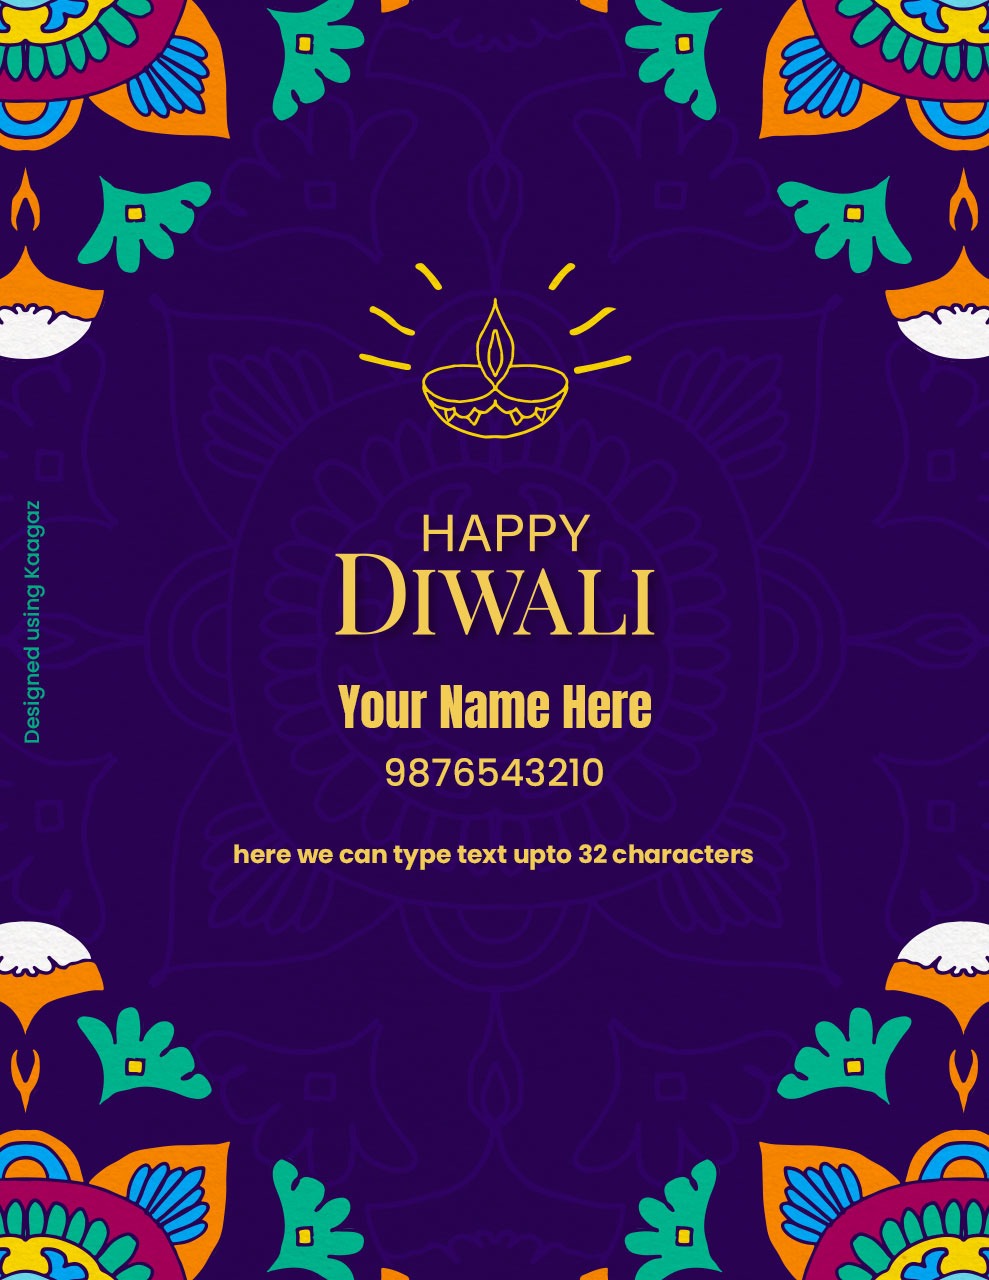 Have a happy & prosperous Diwali